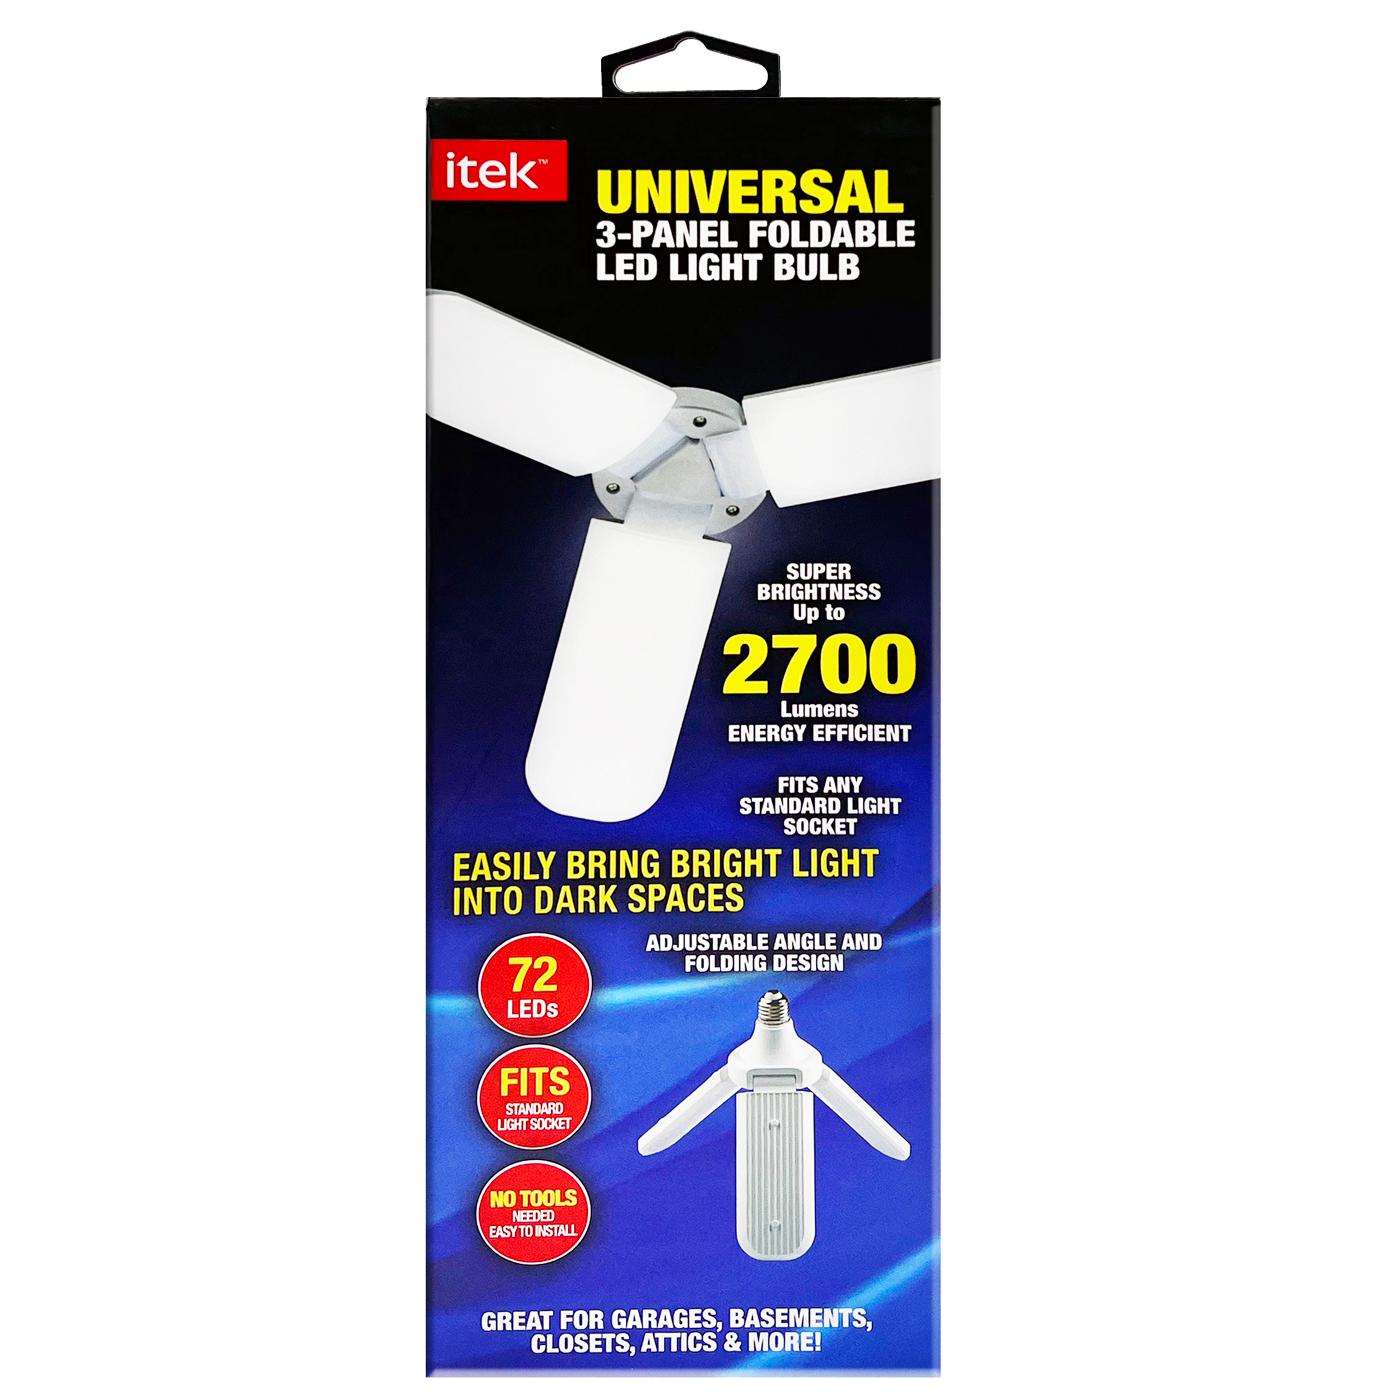 Itek Universal 3-Panel Foldable LED Light Bulb; image 1 of 4